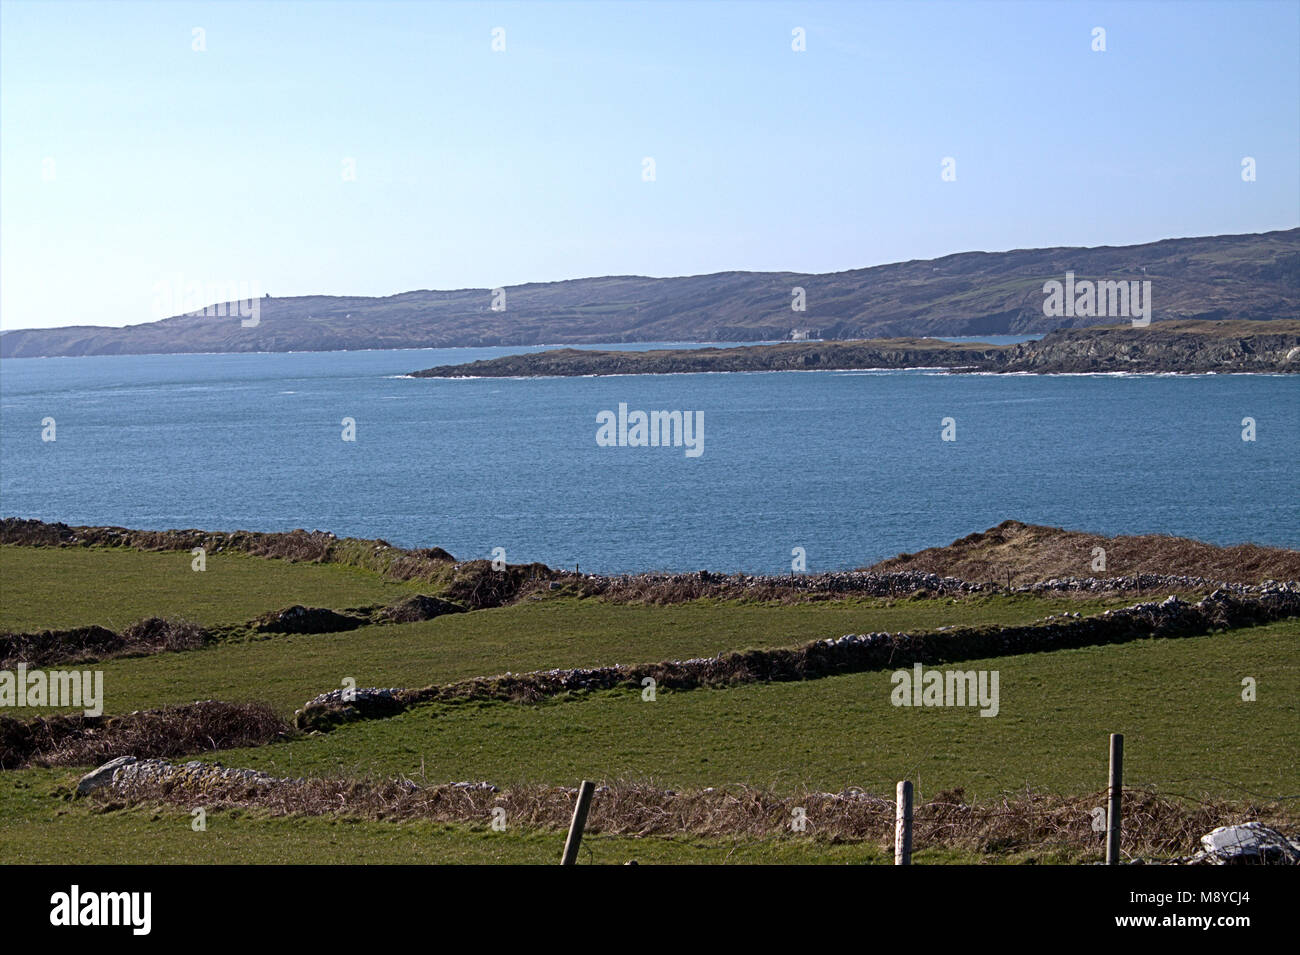 views across the irish coastline and surrounding countryside of west cork, ireland. Stock Photo